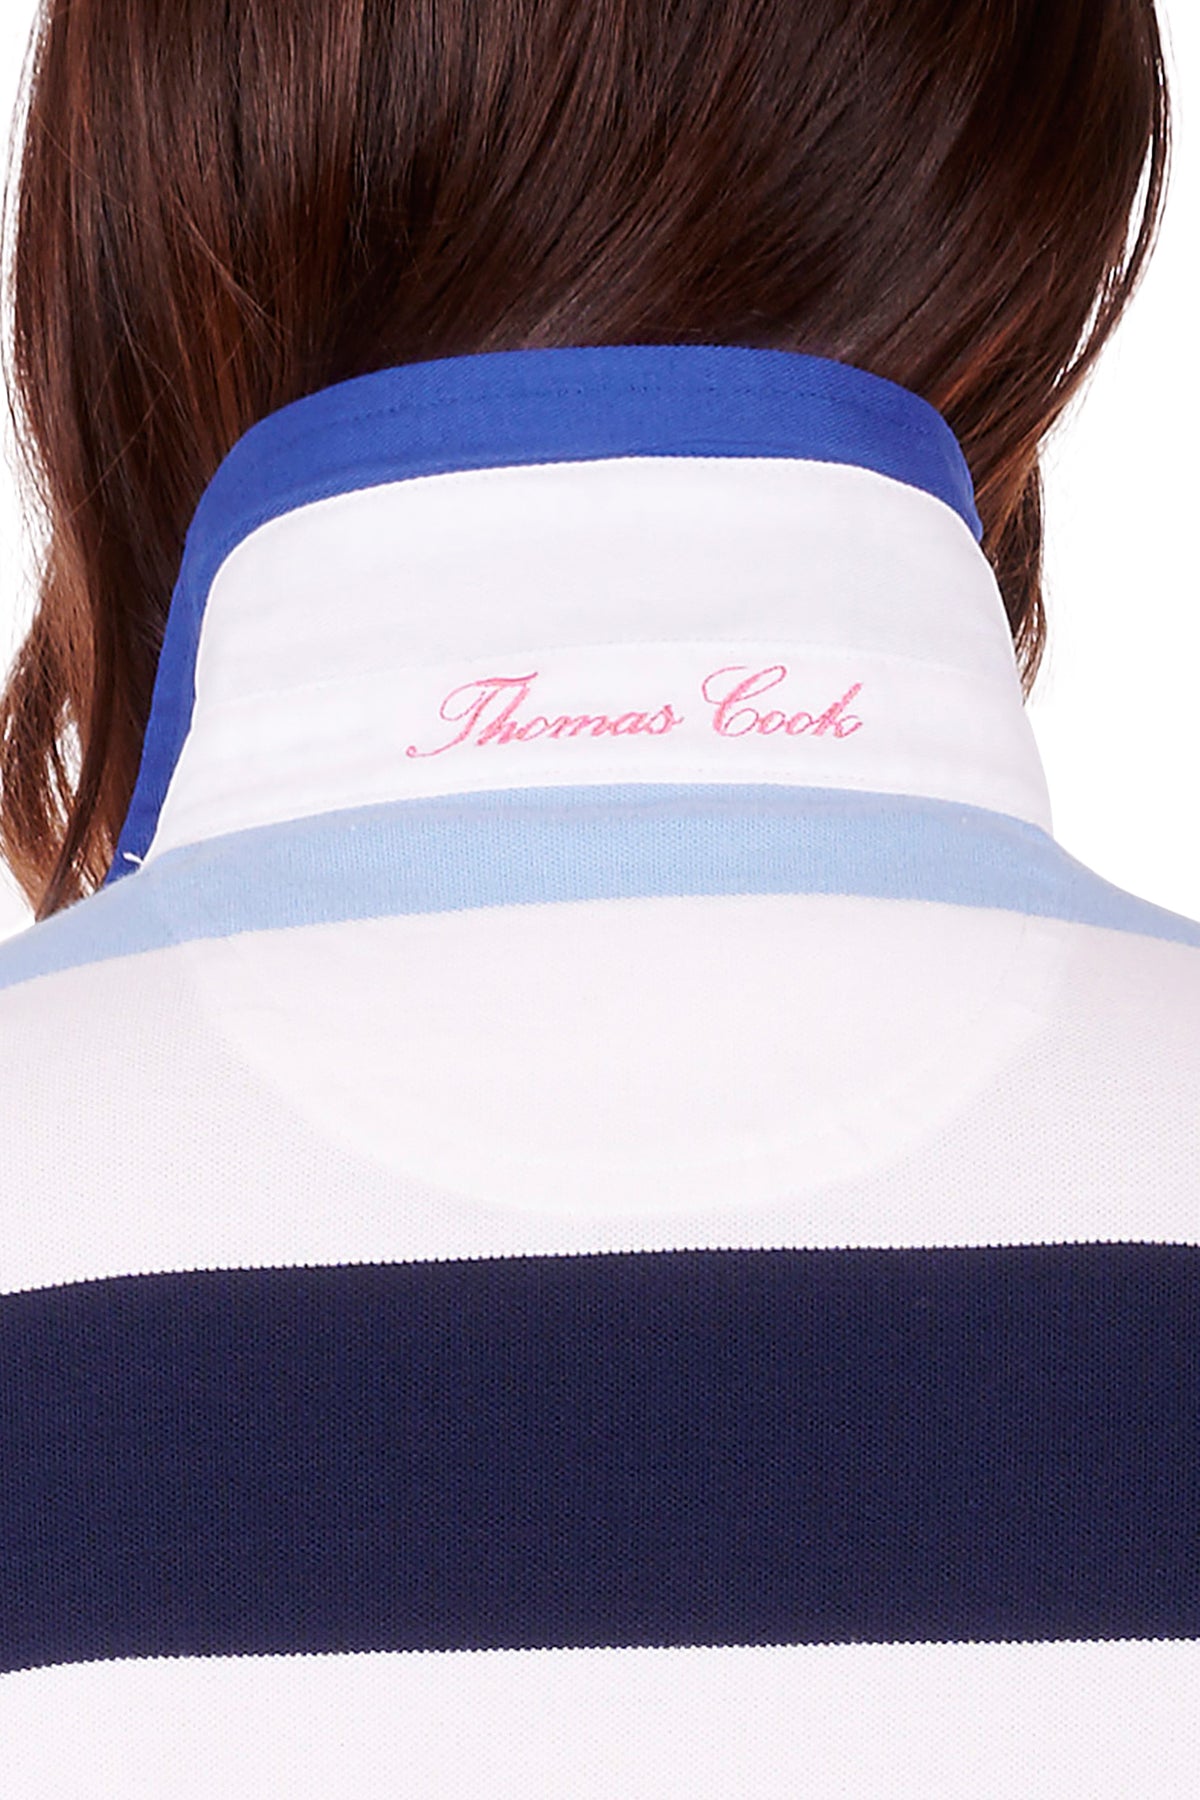 Thomas Cook Womens Arizona Polo - Royal Blue